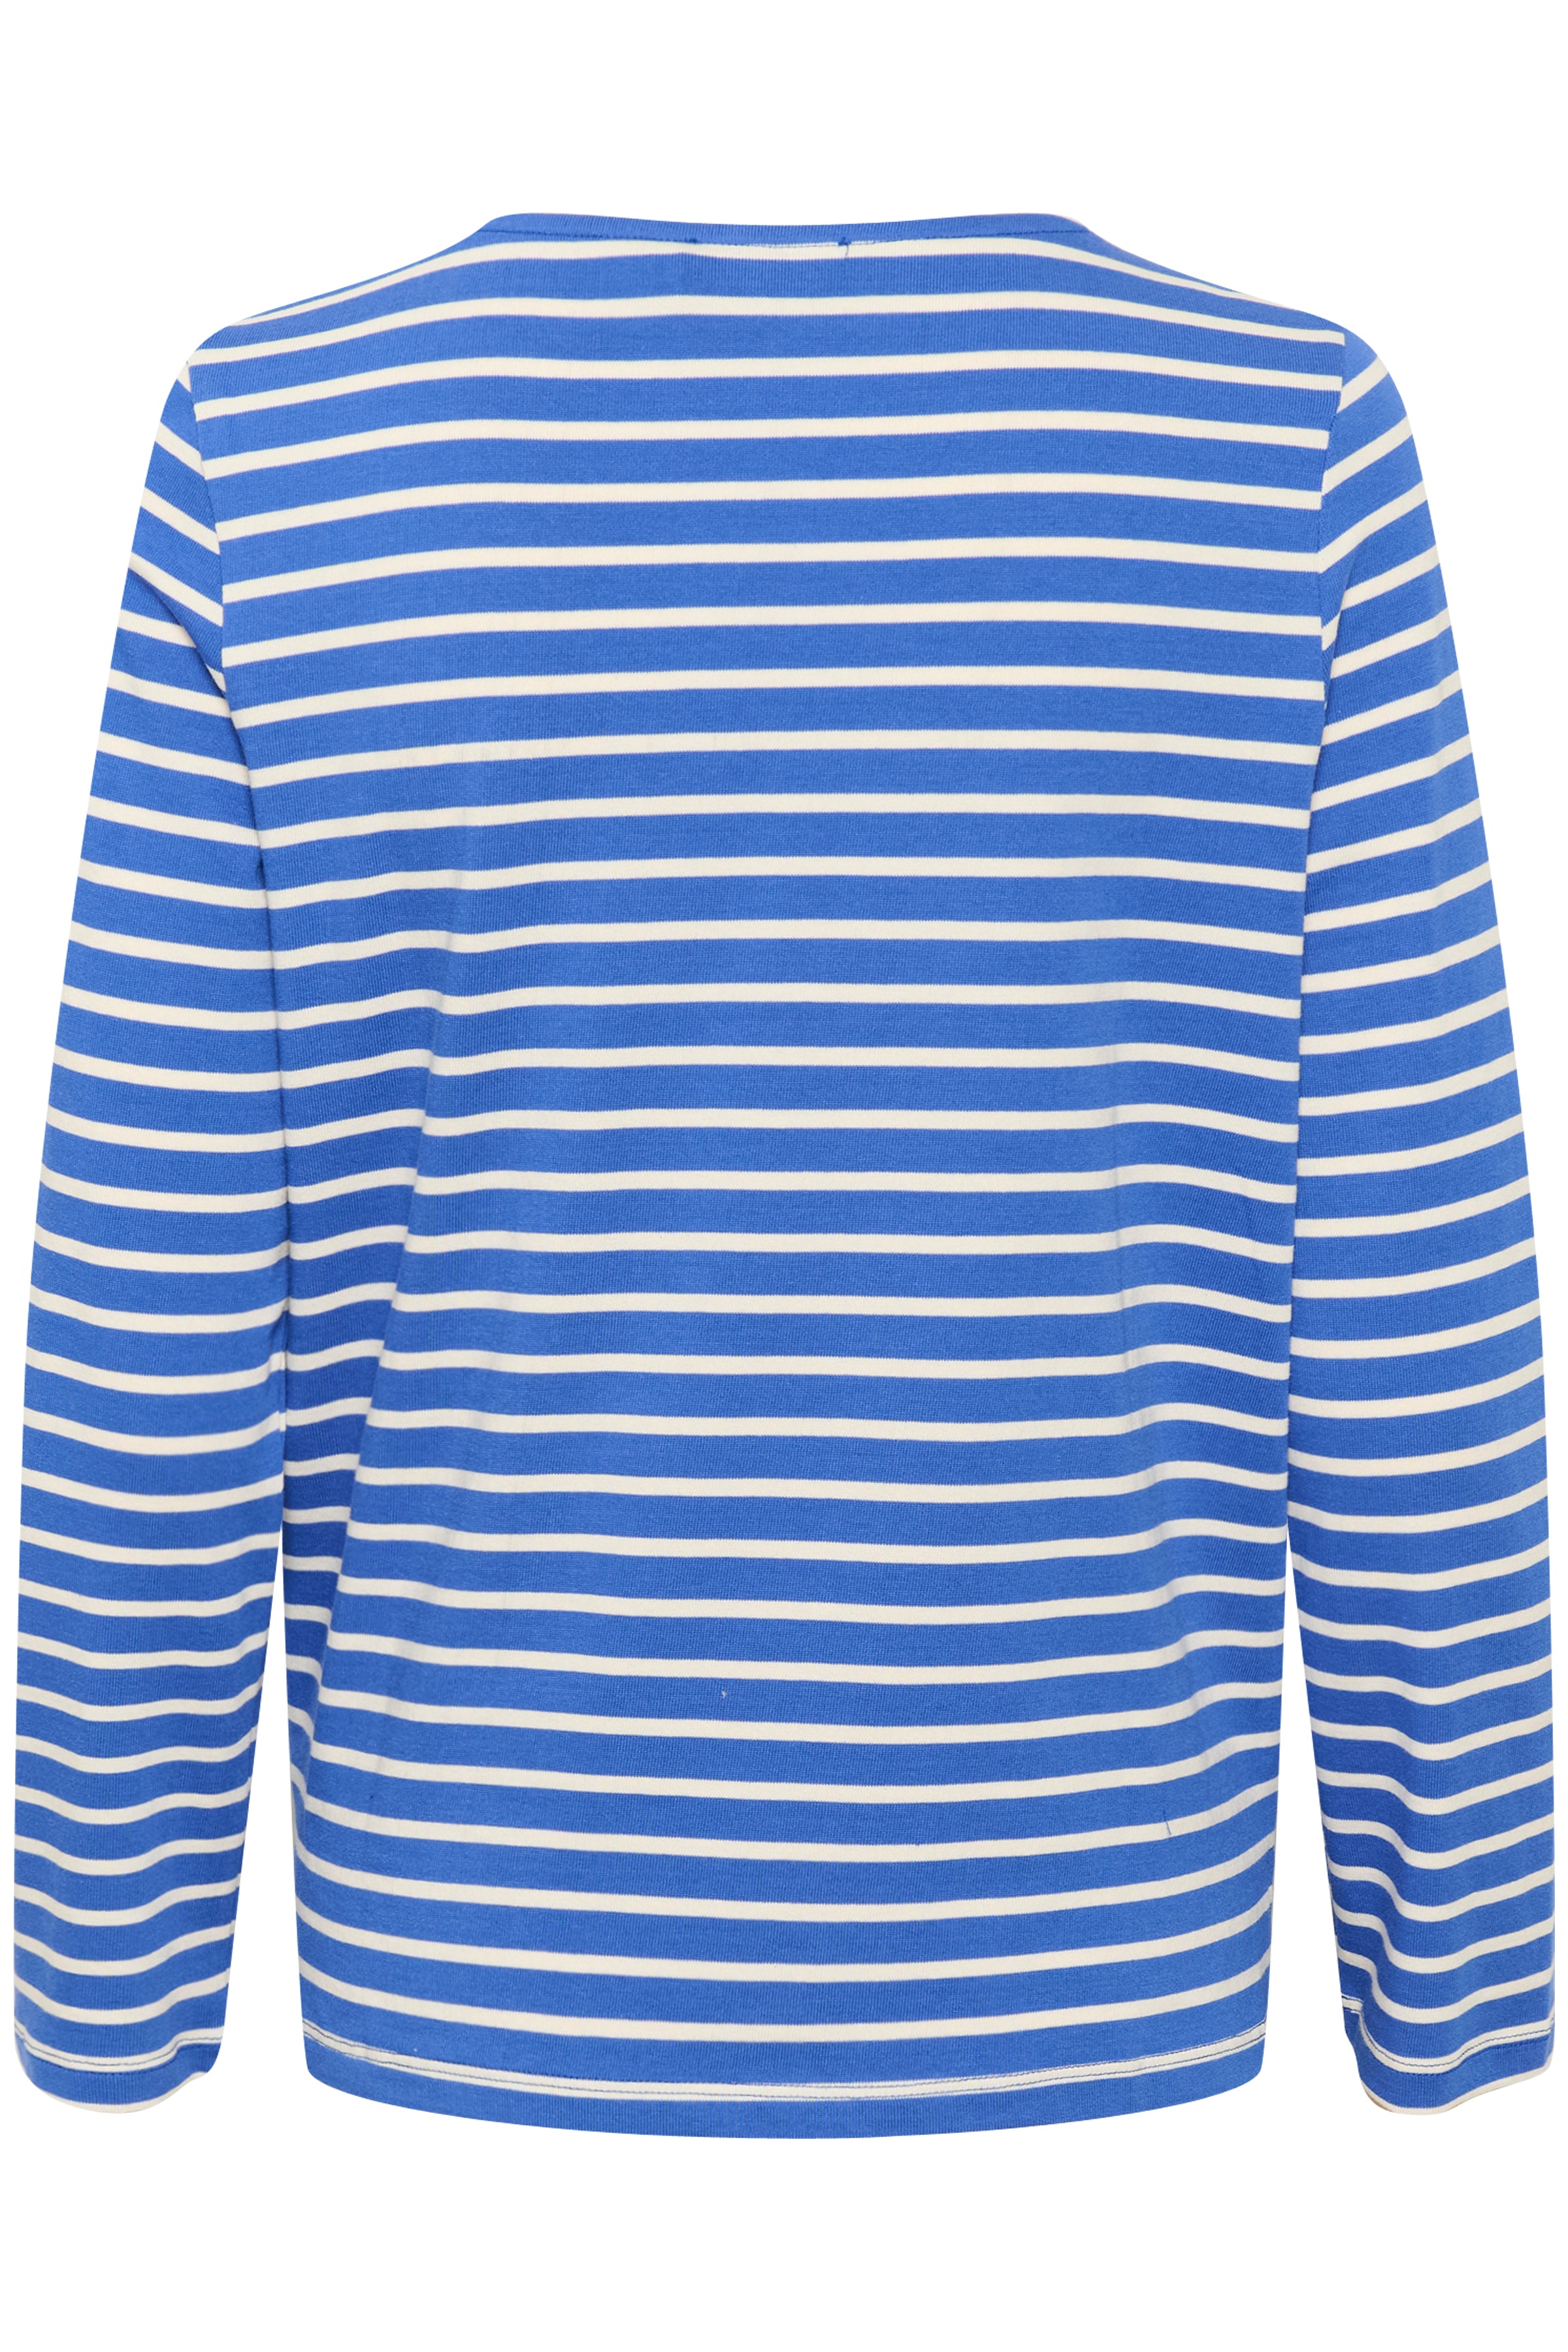 Soaked Neo Long sleeve - Blue stripe